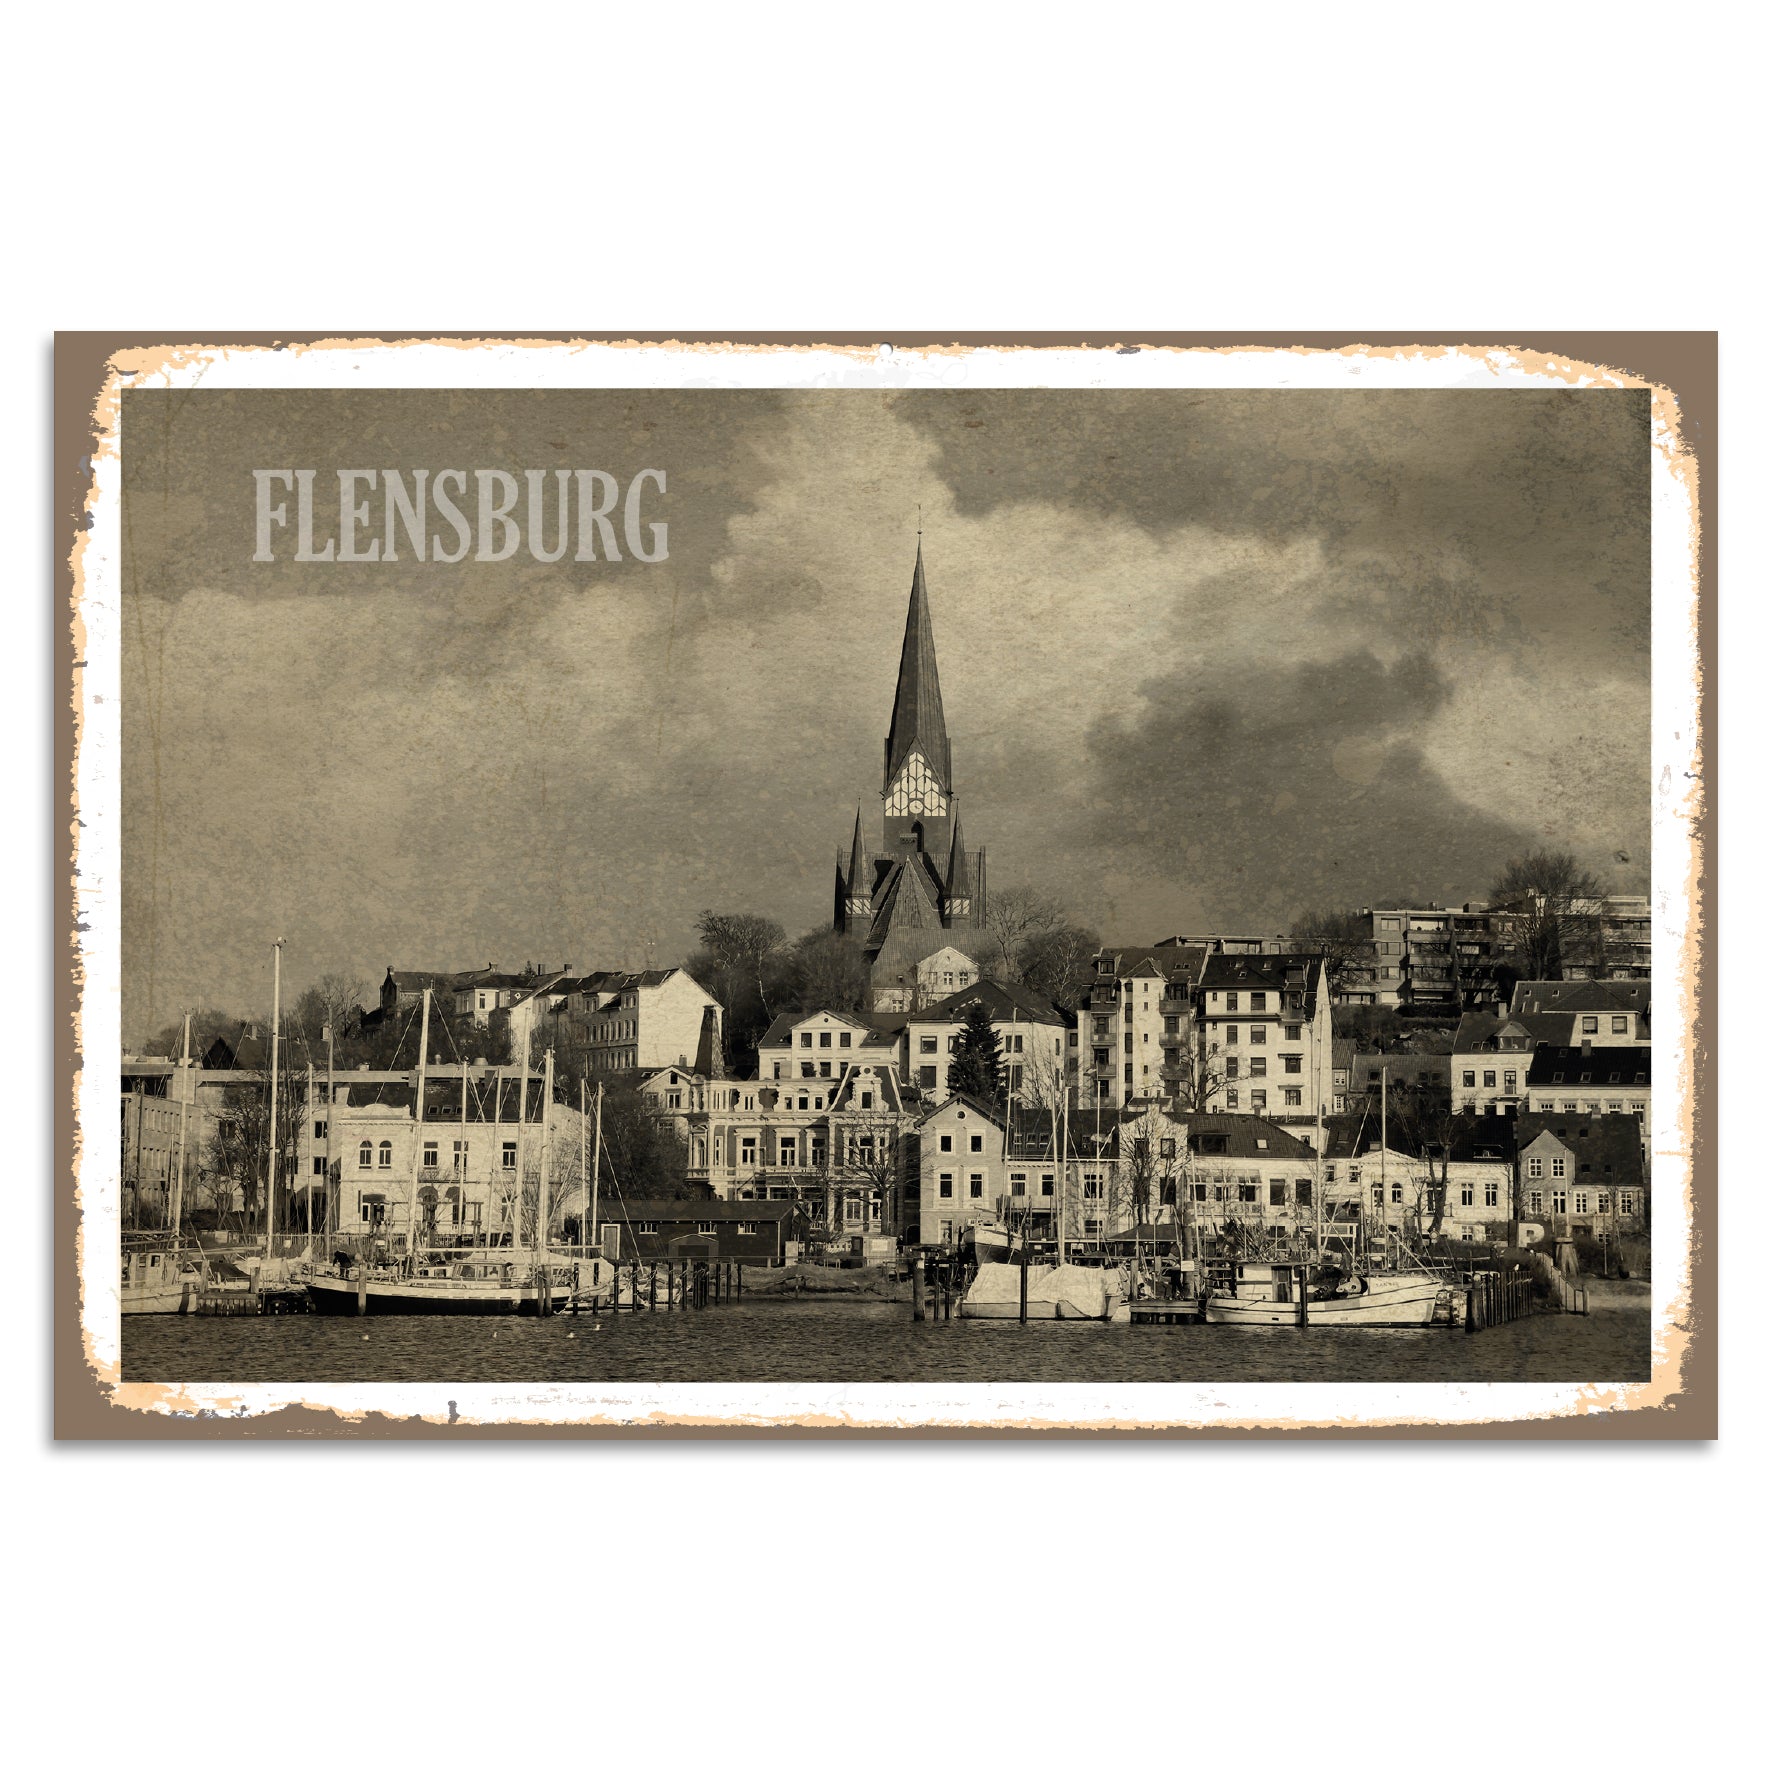 Blechschild - Flensburg